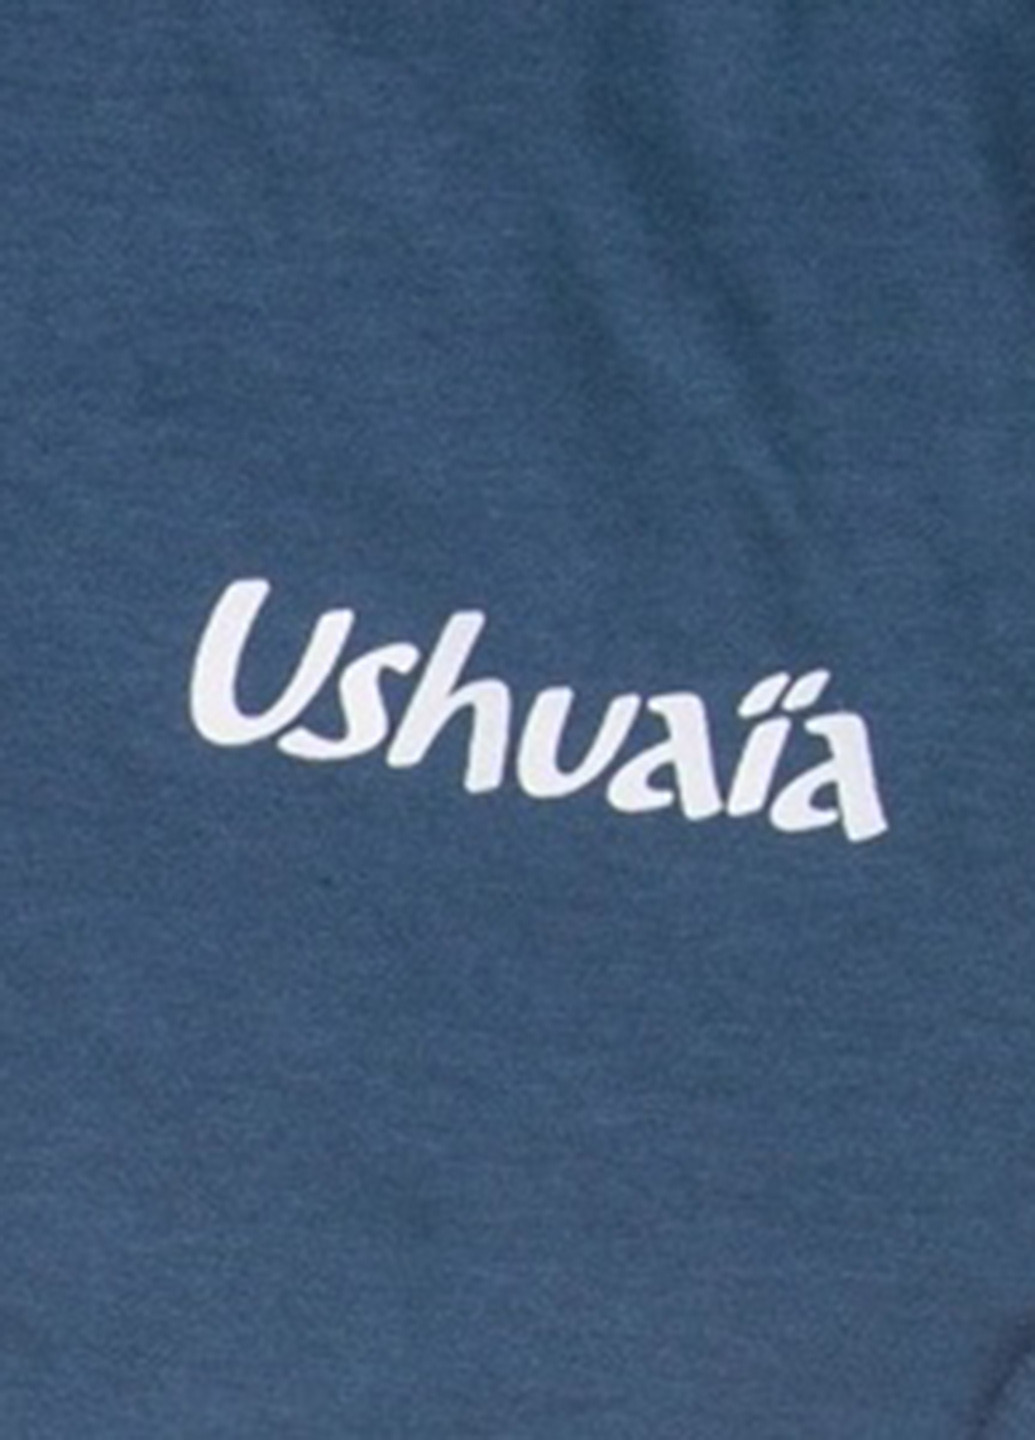 Синяя всесезон пижама (лонгслив, брюки) Ushuaia